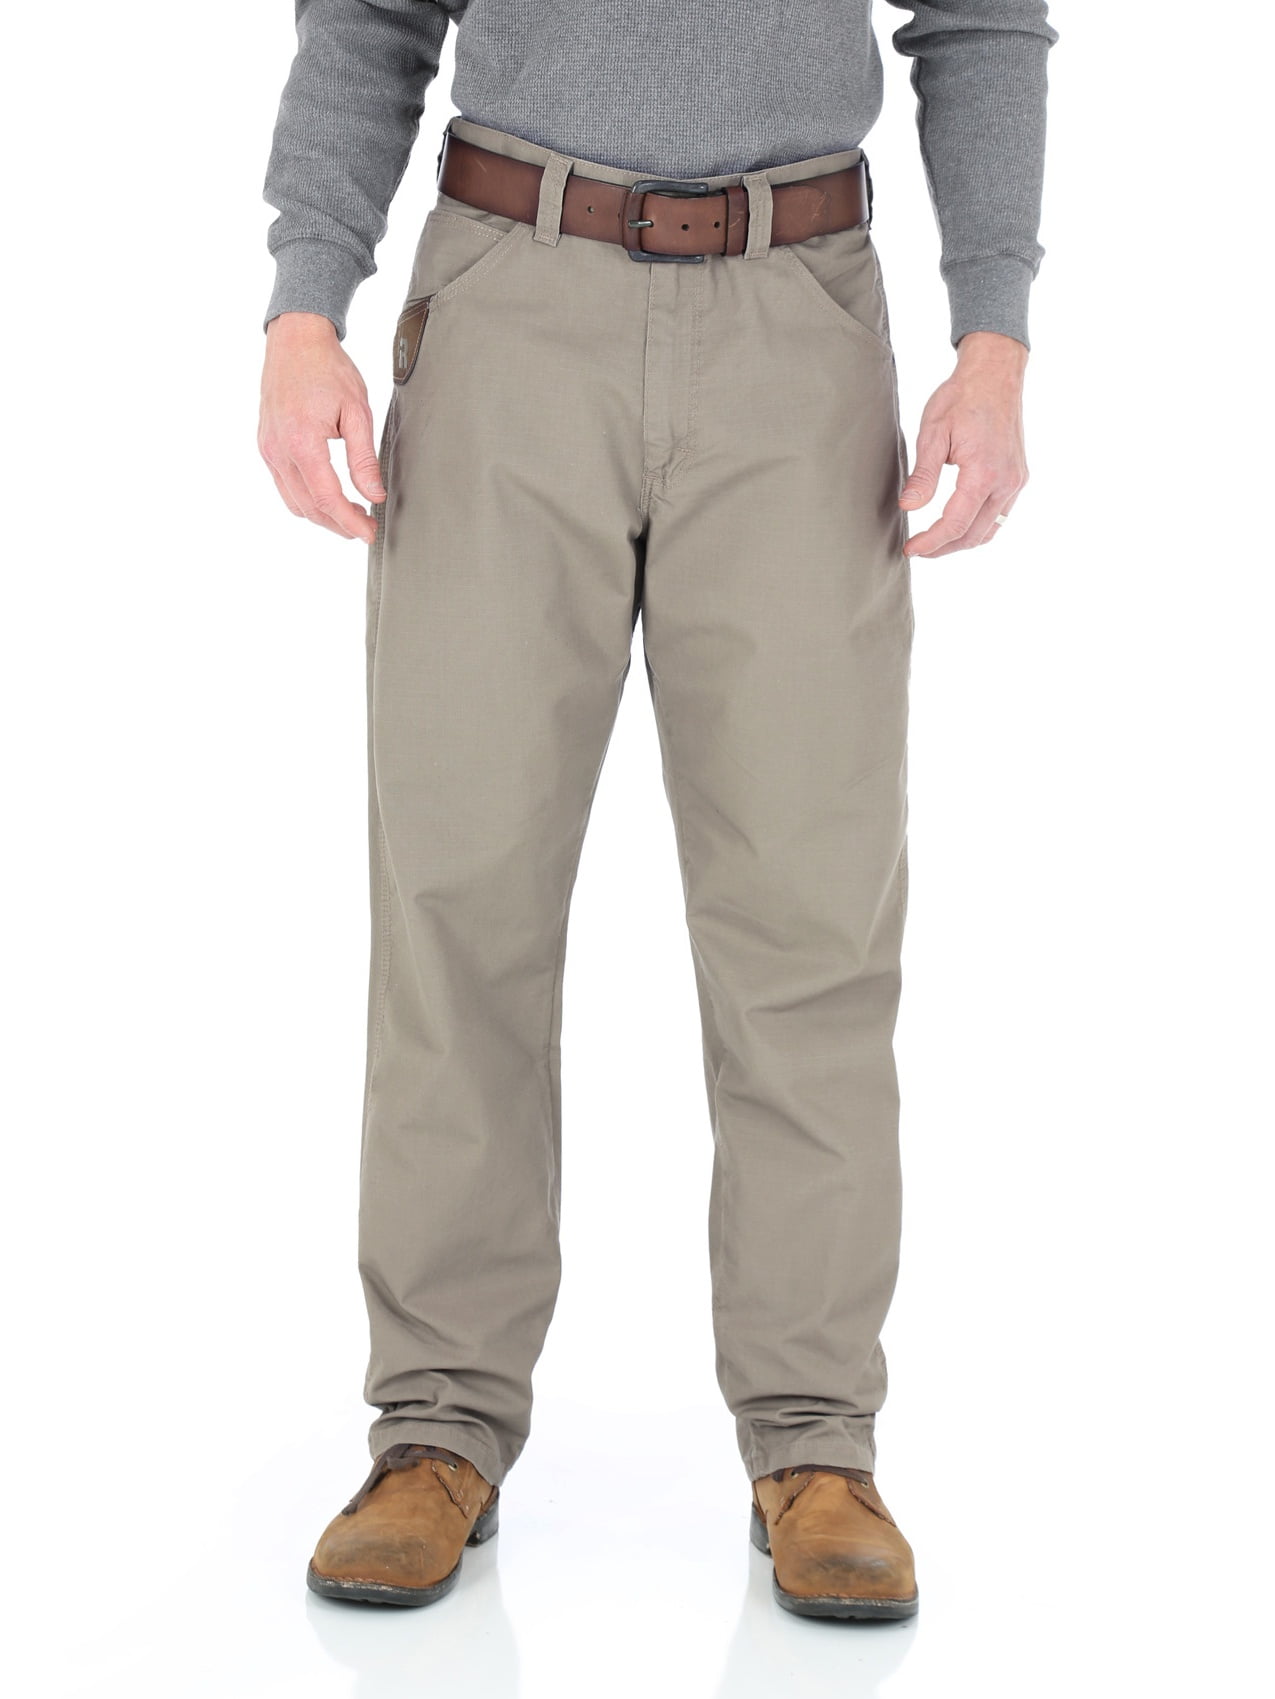 Wrangler Riggs Workwear Mens Riggs Workwear Technical Pant Pants